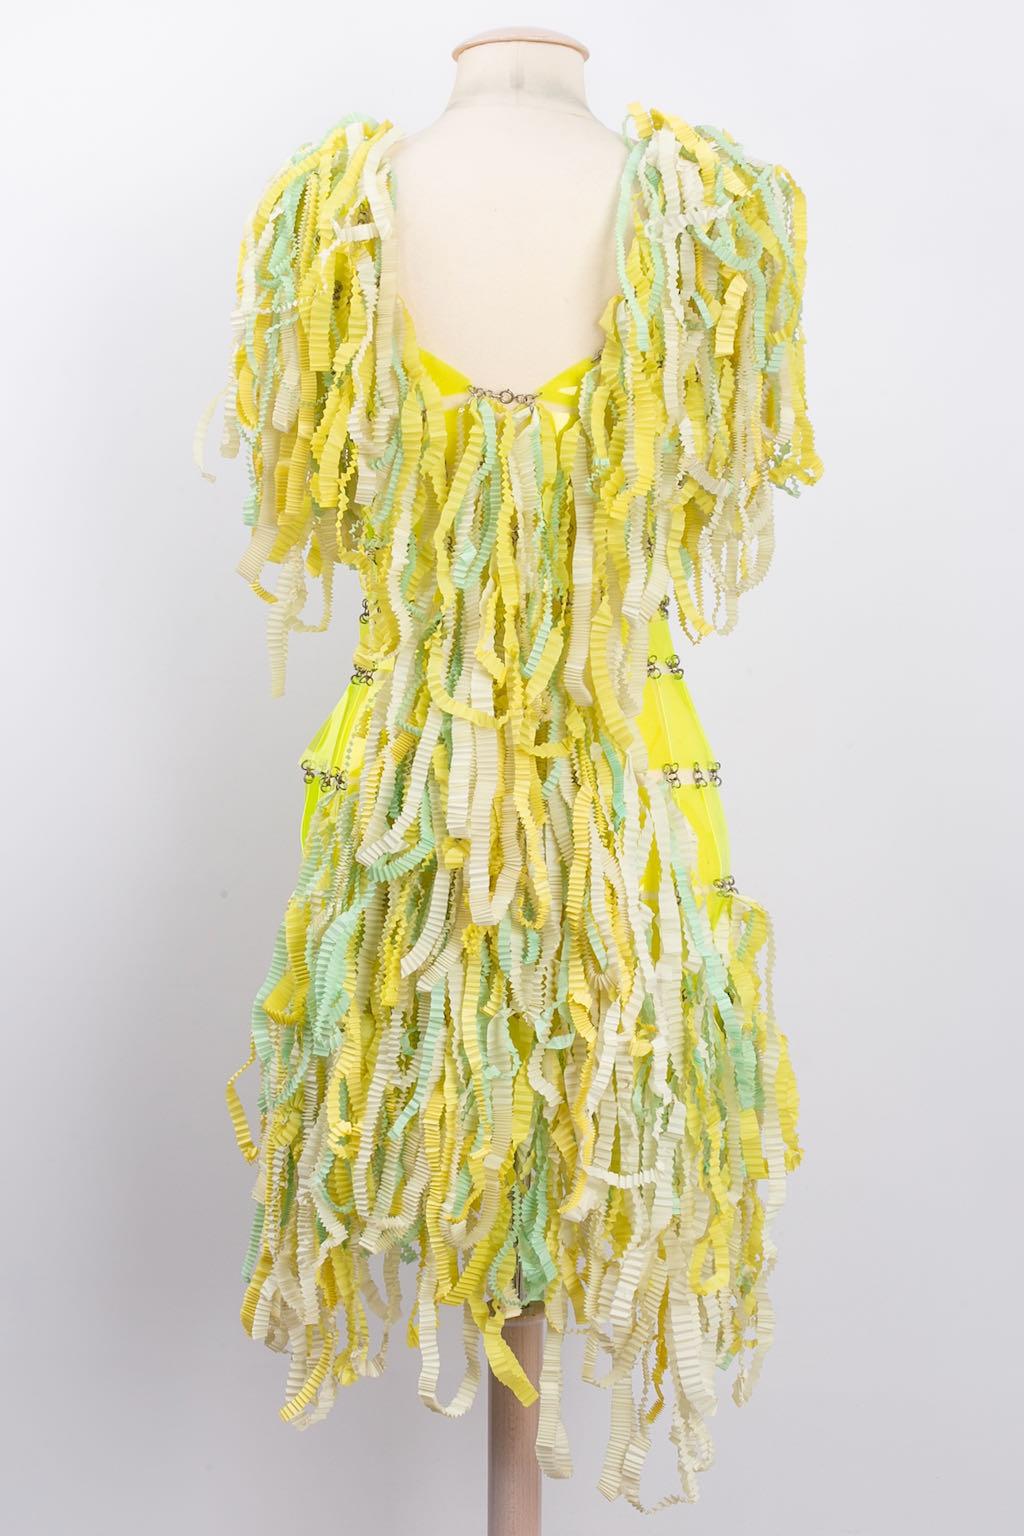 Paco Rabanne Rare Rhodoïd One-off Dress, Circa 1960/70s In Good Condition For Sale In SAINT-OUEN-SUR-SEINE, FR